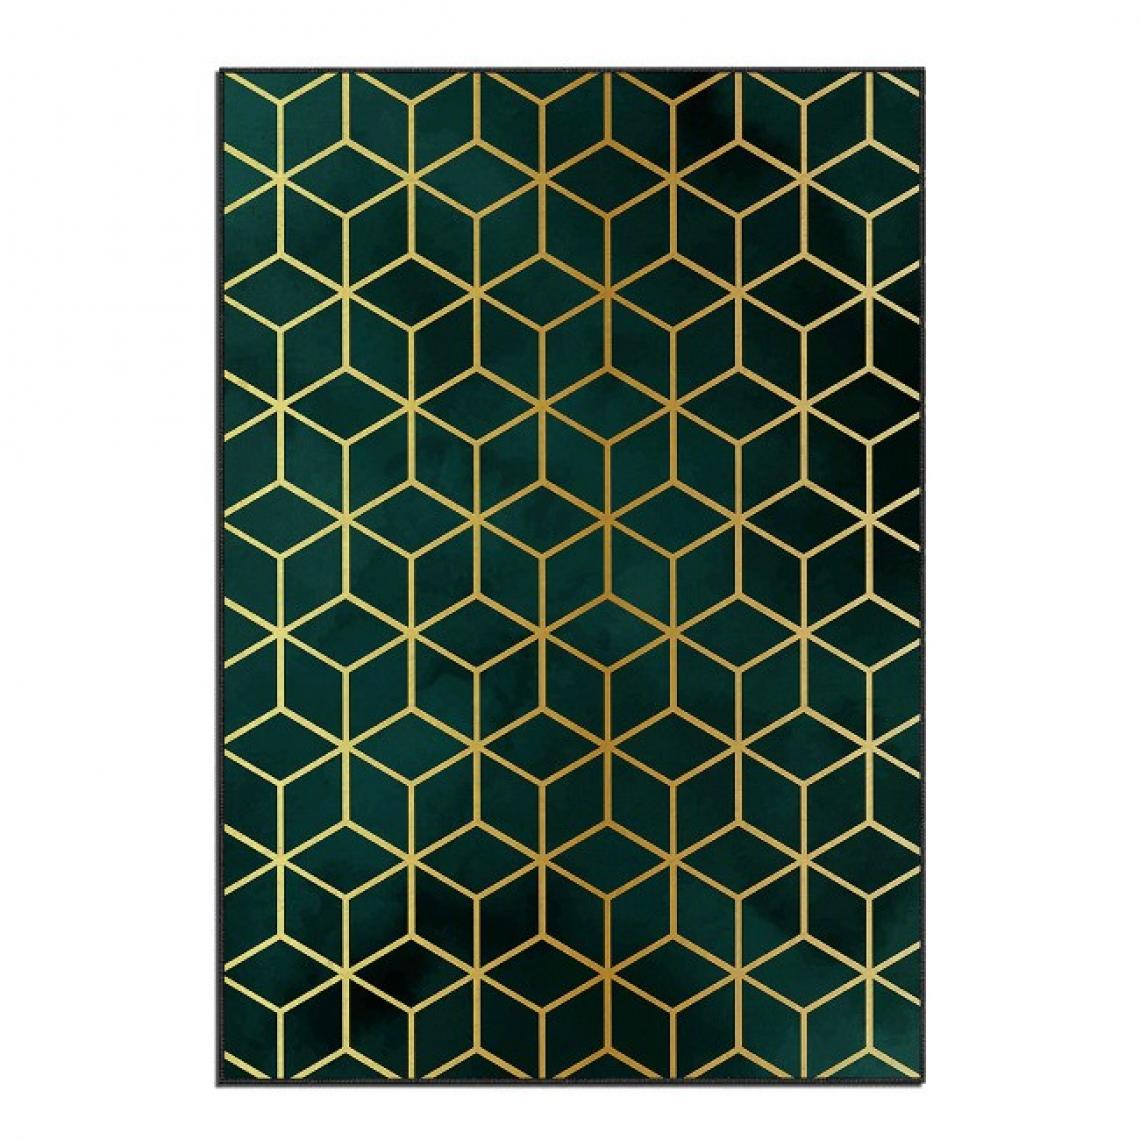 Homemania - HOMEMANIA Tapis décoratif Geometric Dream 2 - Vert, Or - 120 x 180 cm - Tapis